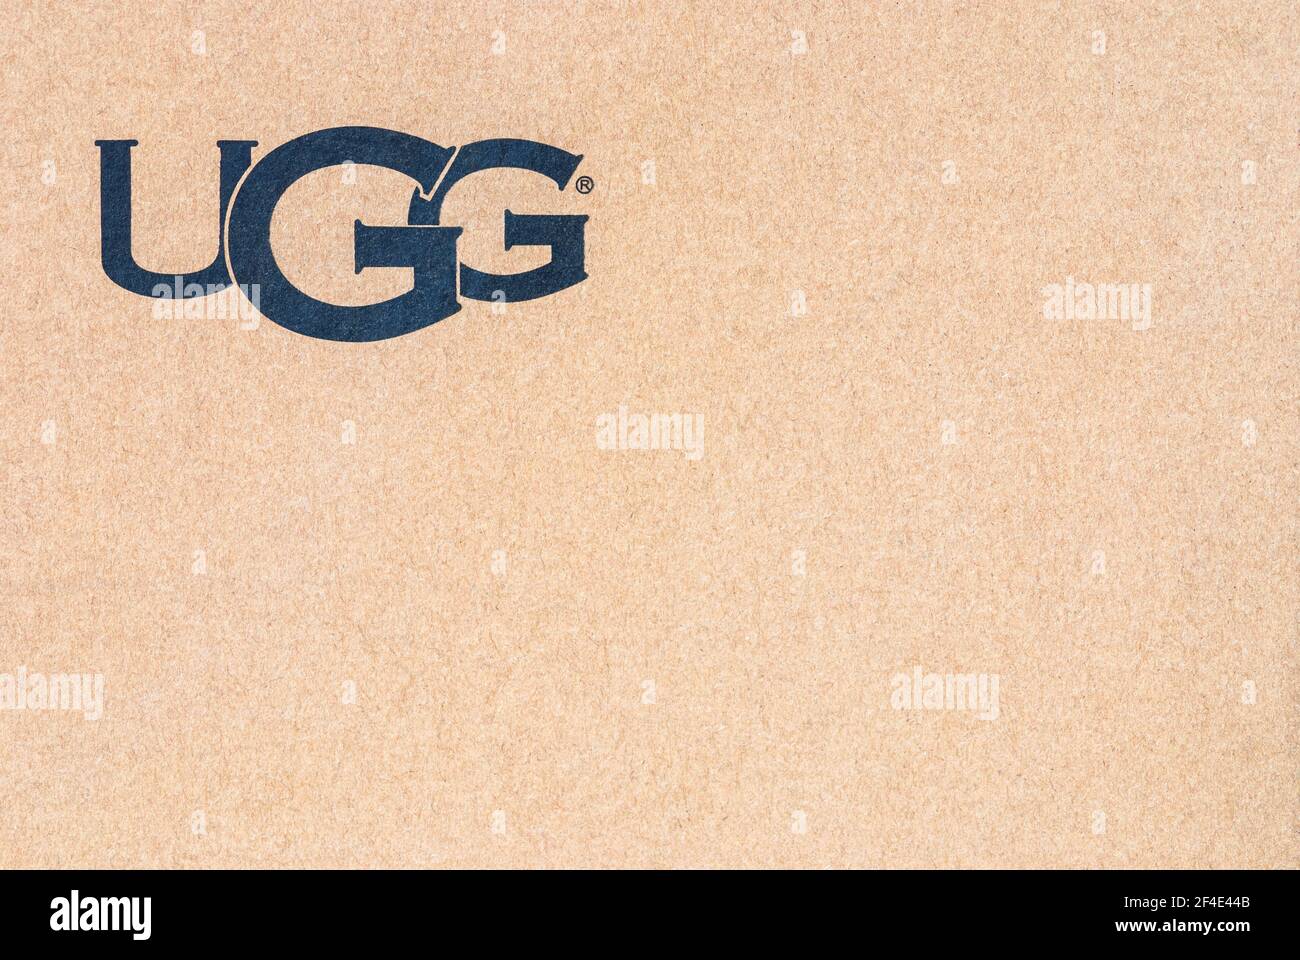 UGG shoe company brand logo on cardboard shoebox, Moscow, 13 March 2021  Stock Photo - Alamy